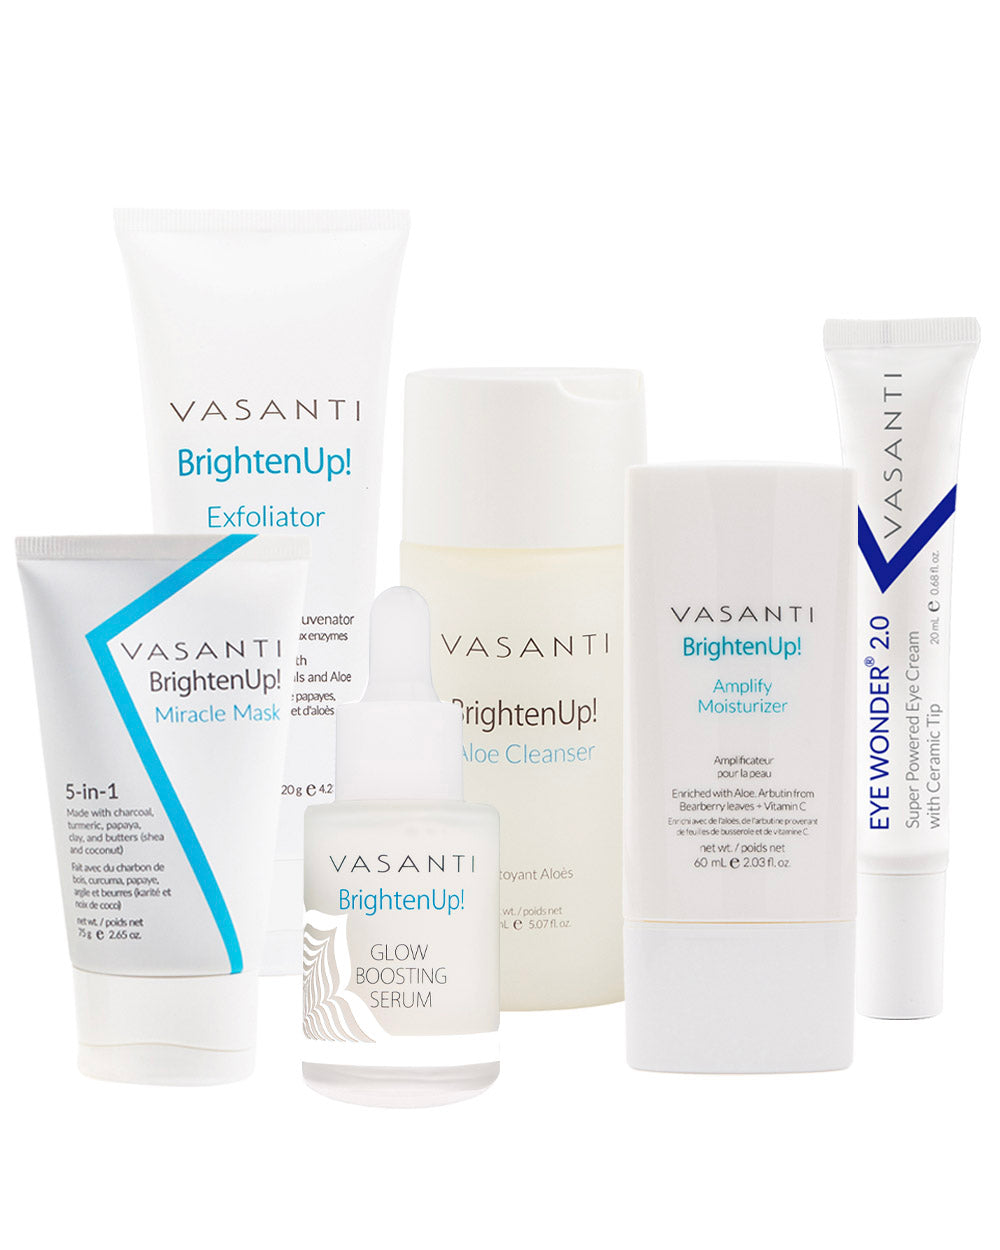 BrightenUp! Miracle Mask 5 in 1 – Vasanti Cosmetics - Canada